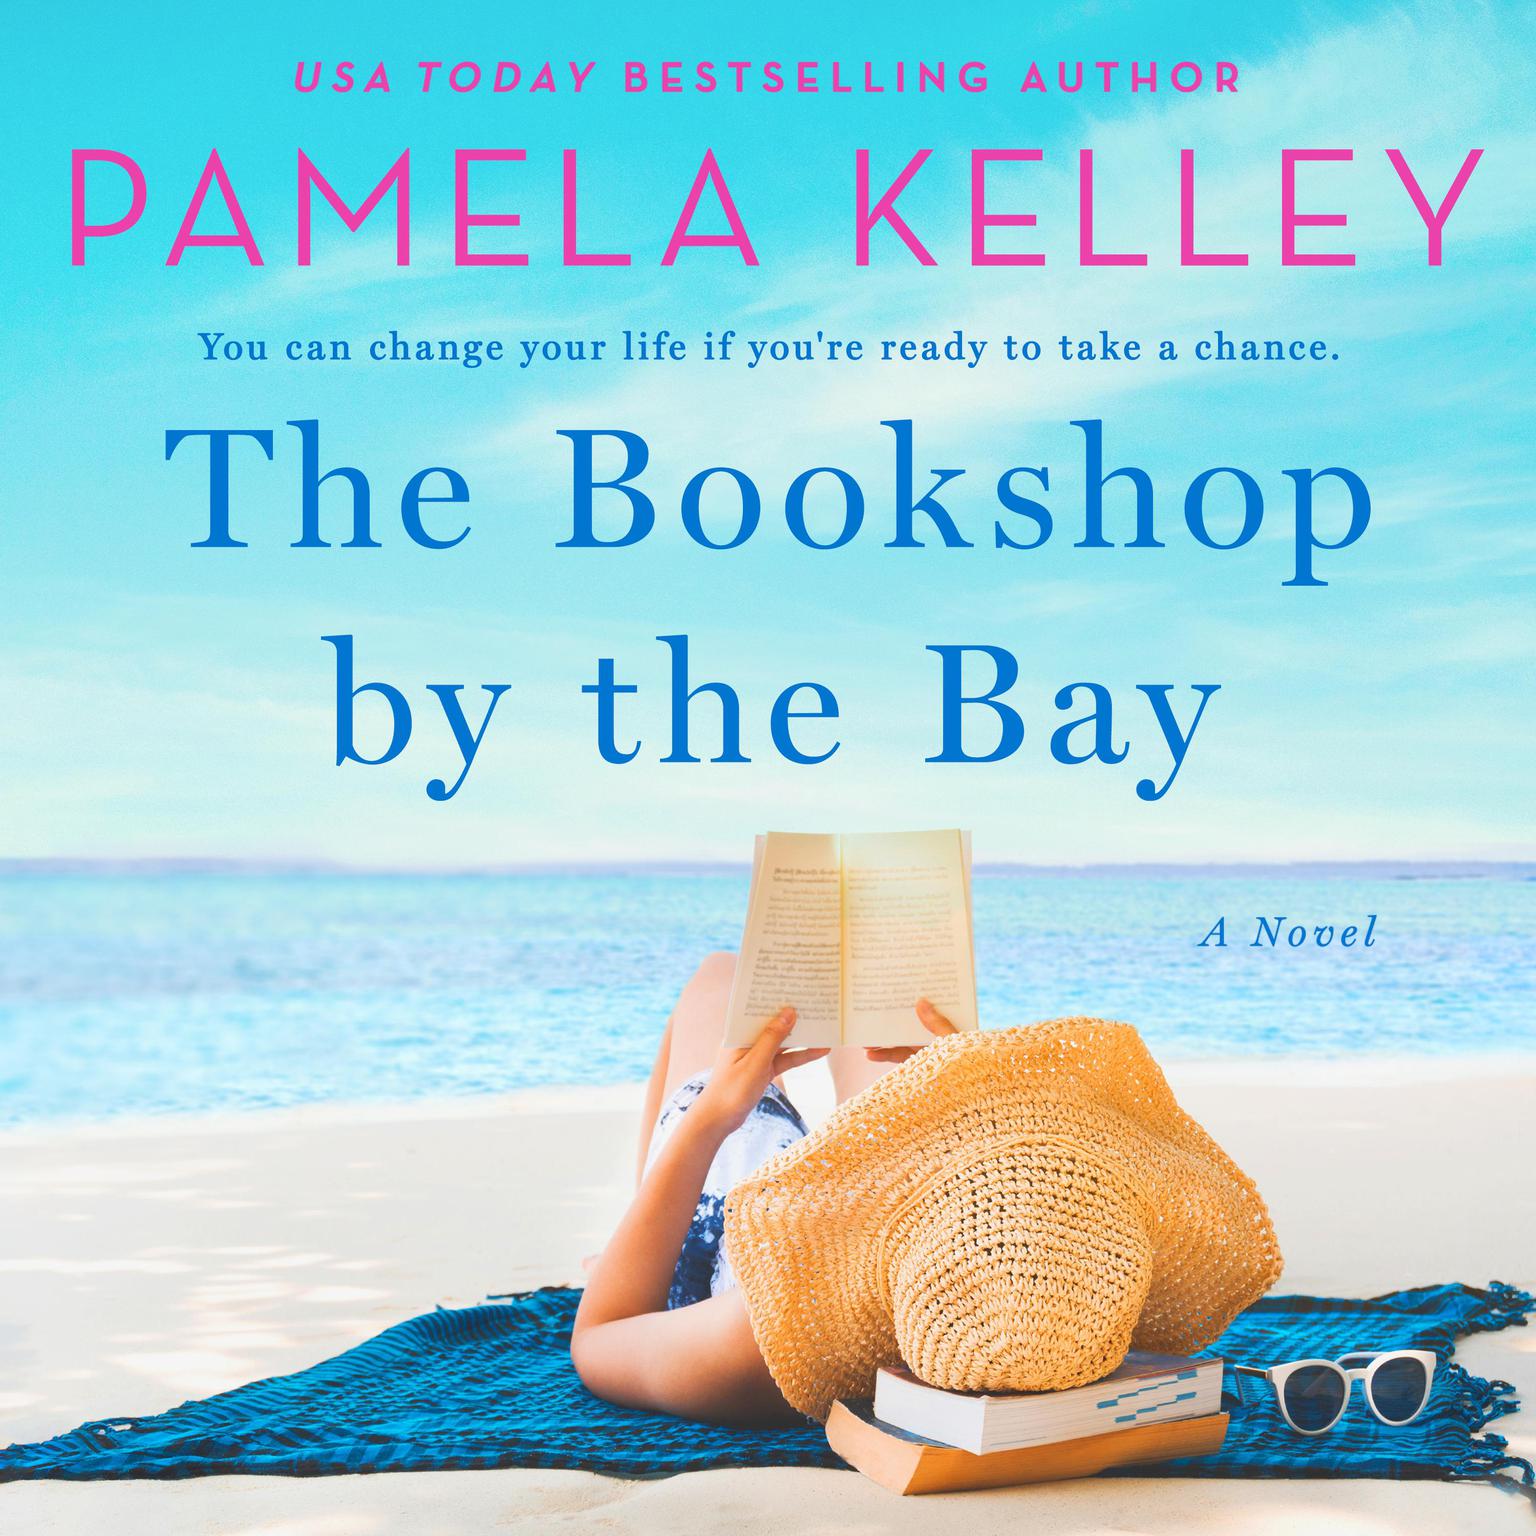 The Bookshop by the Bay: A Novel Audiobook, by Pamela M. Kelley